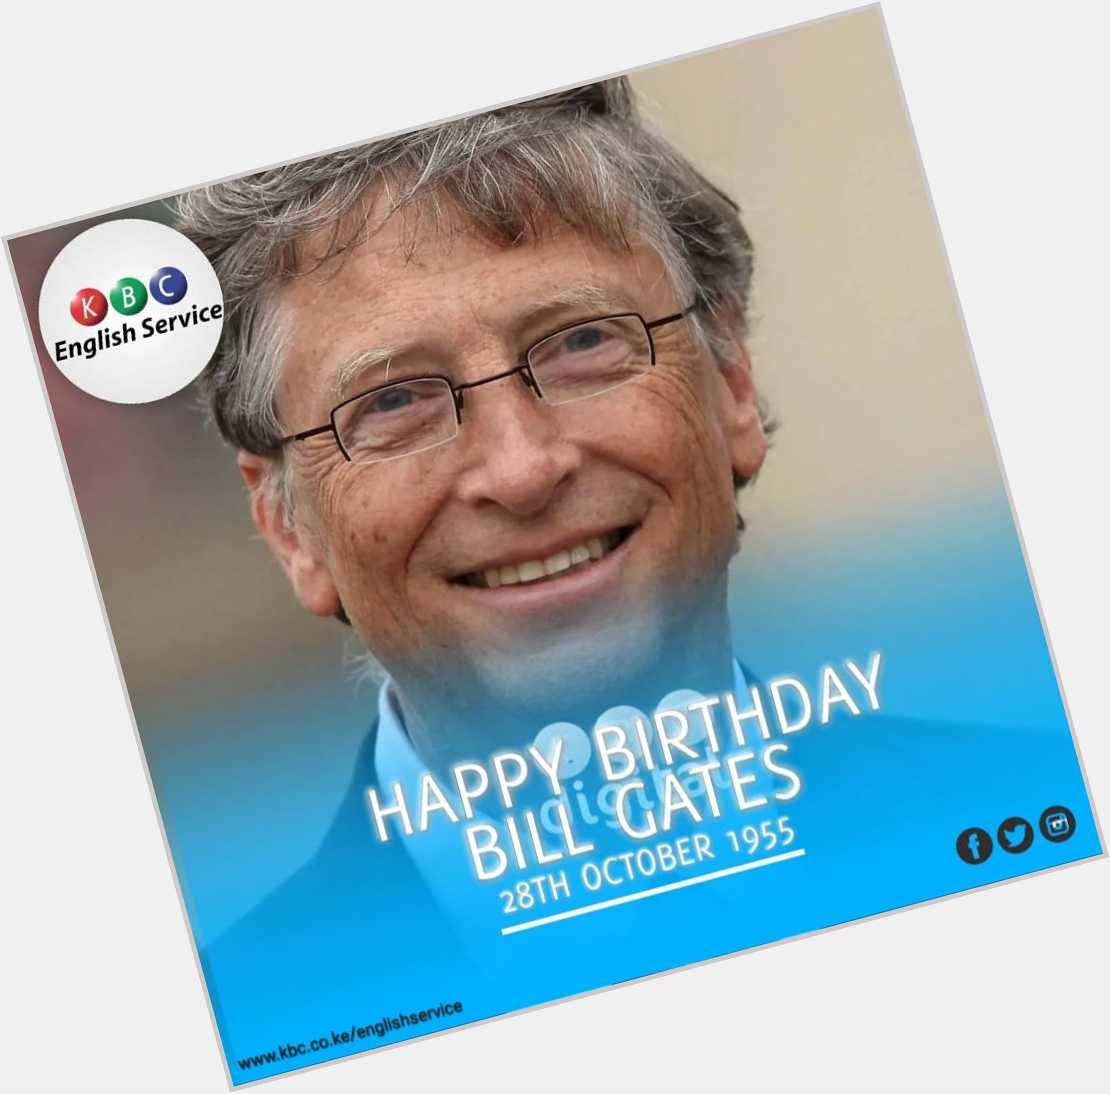 Happy Birthday: BILL GATES
Born: 26th October 1955

^PMN  